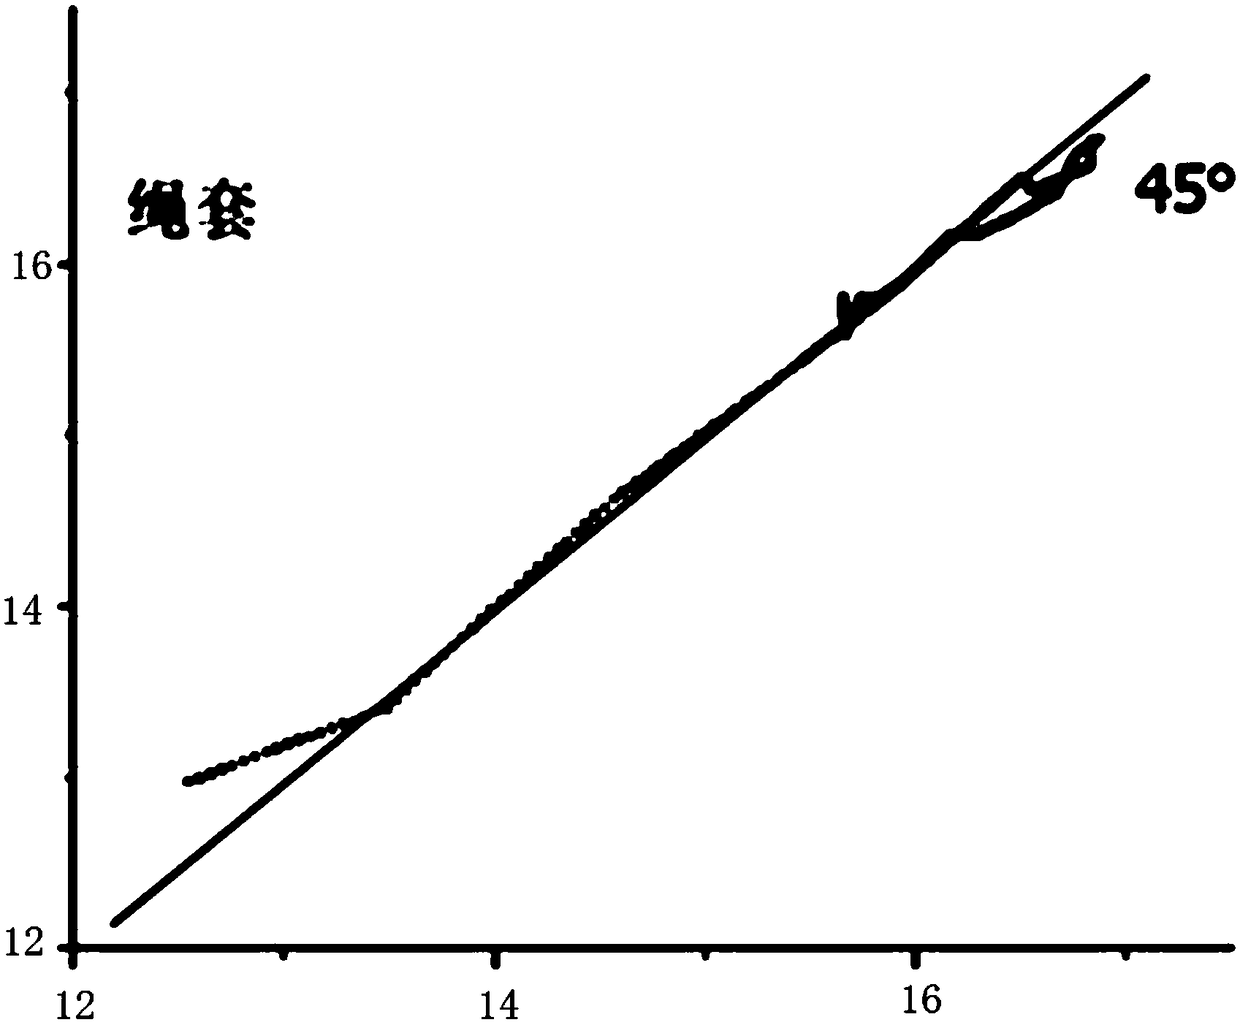 Multi-station linkage rating curve fitting method